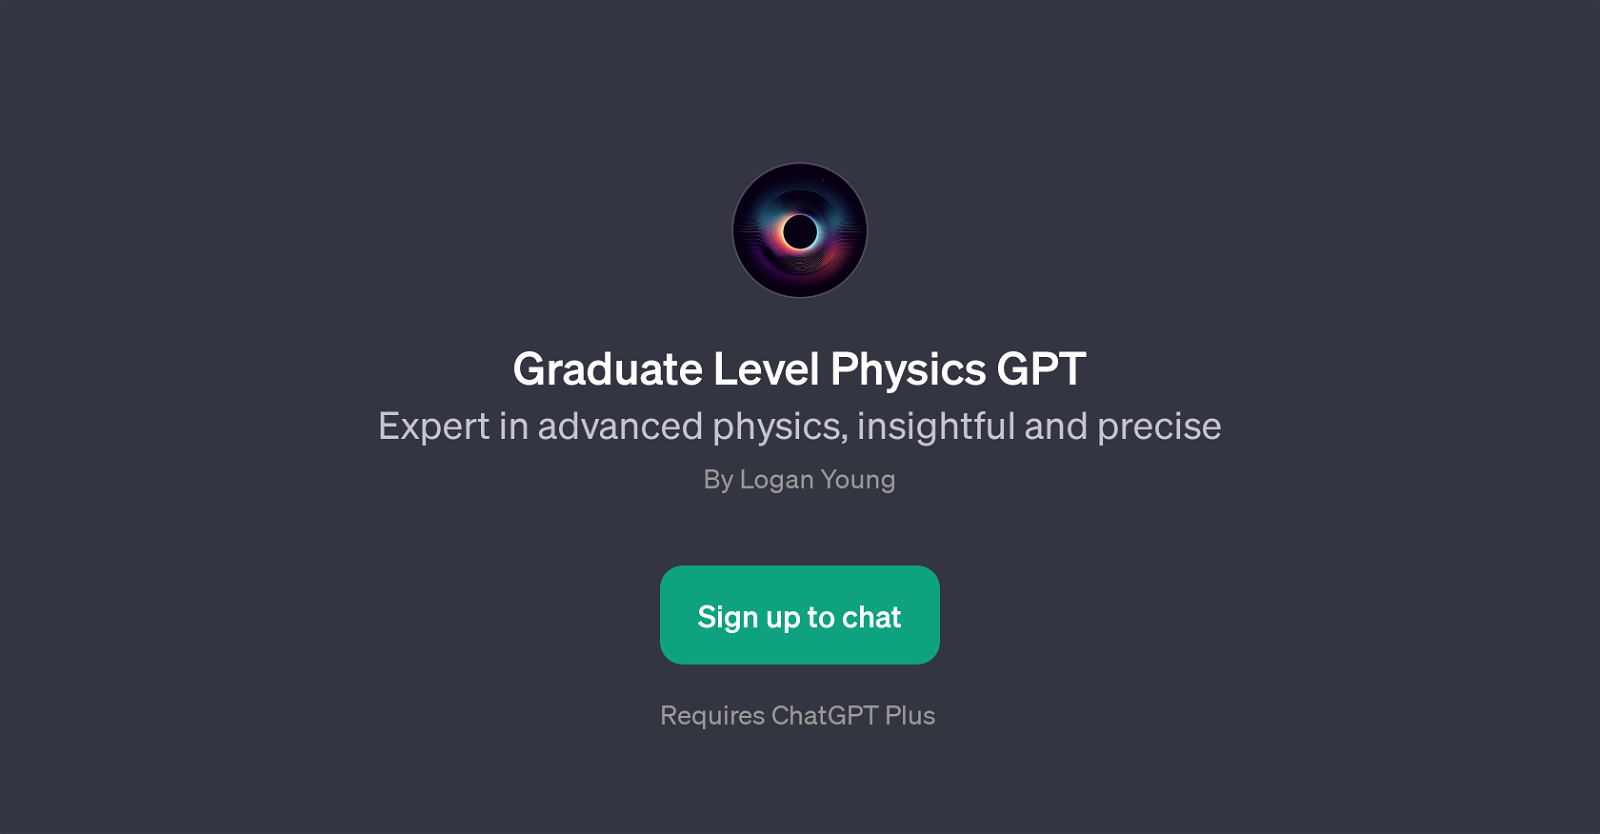 Graduate Level Physics GPT website